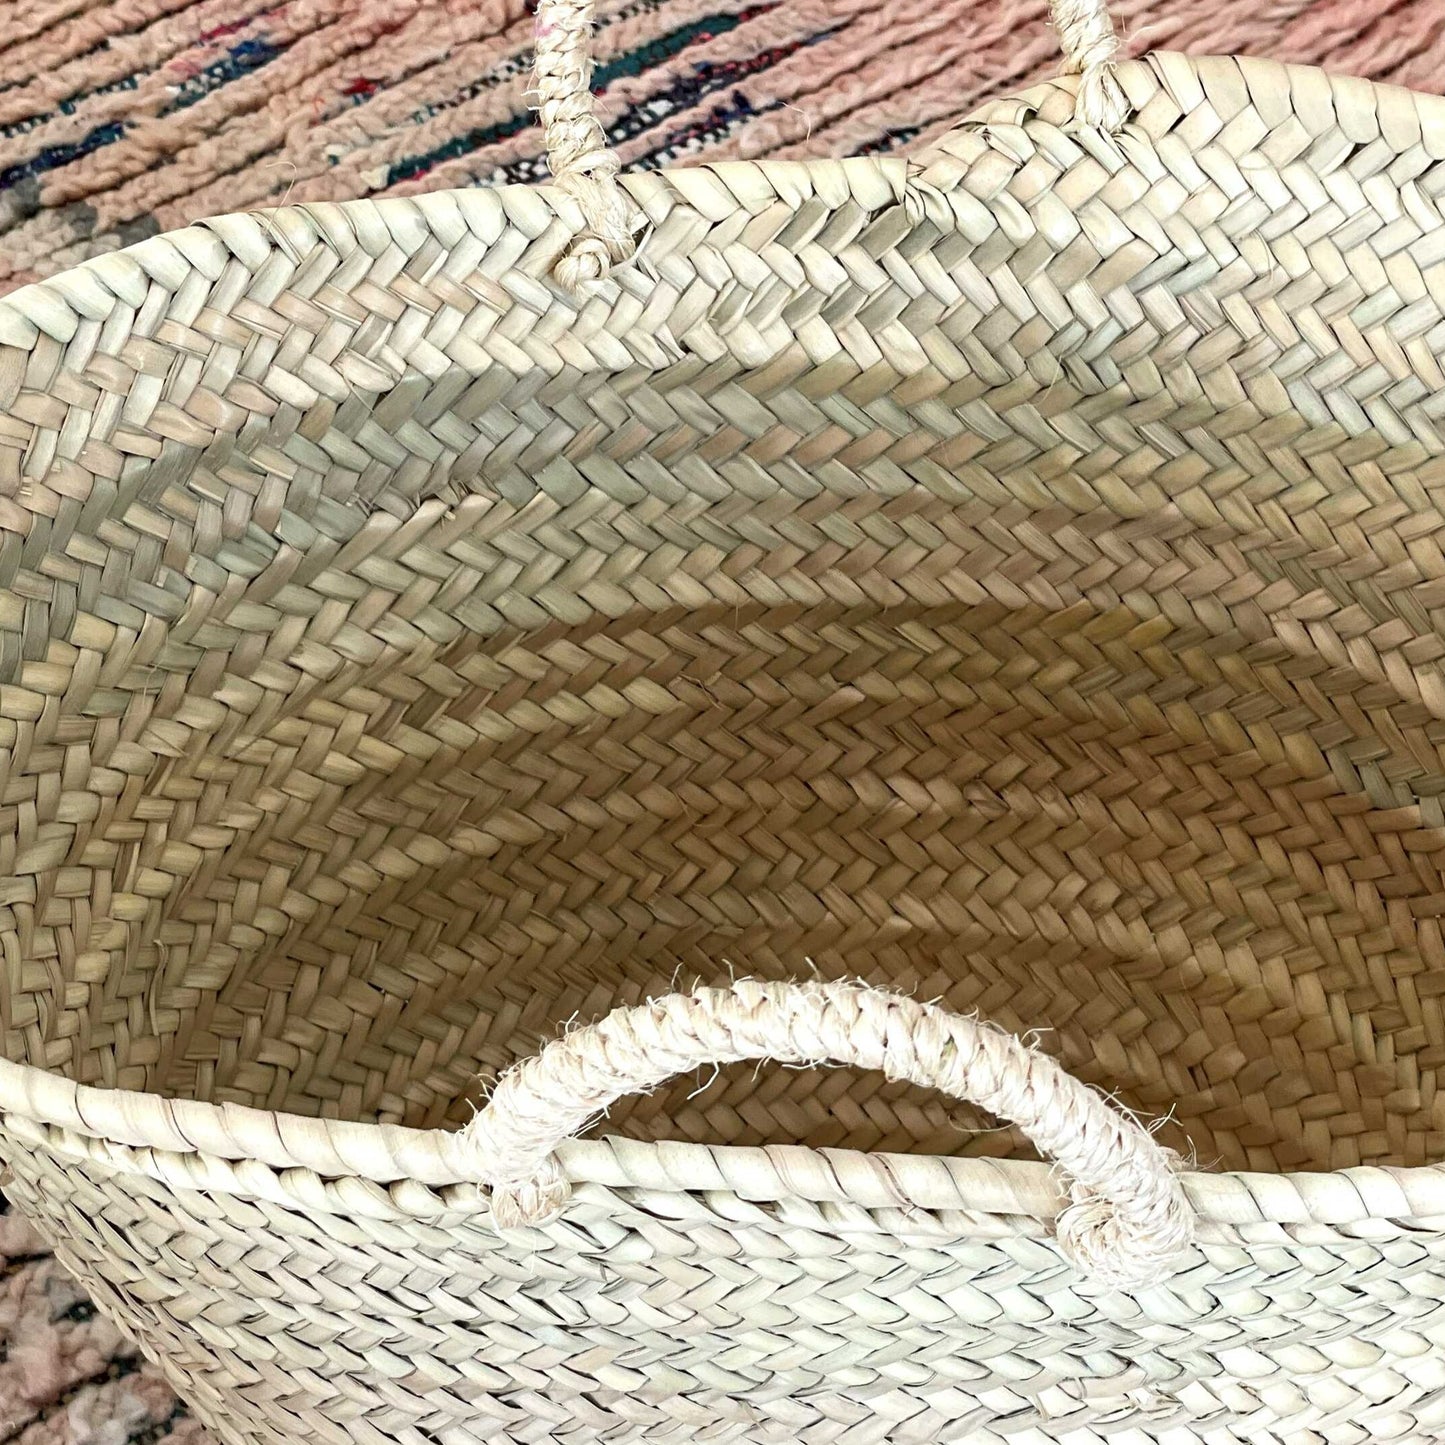 Market basket with handle - 60 cm. high